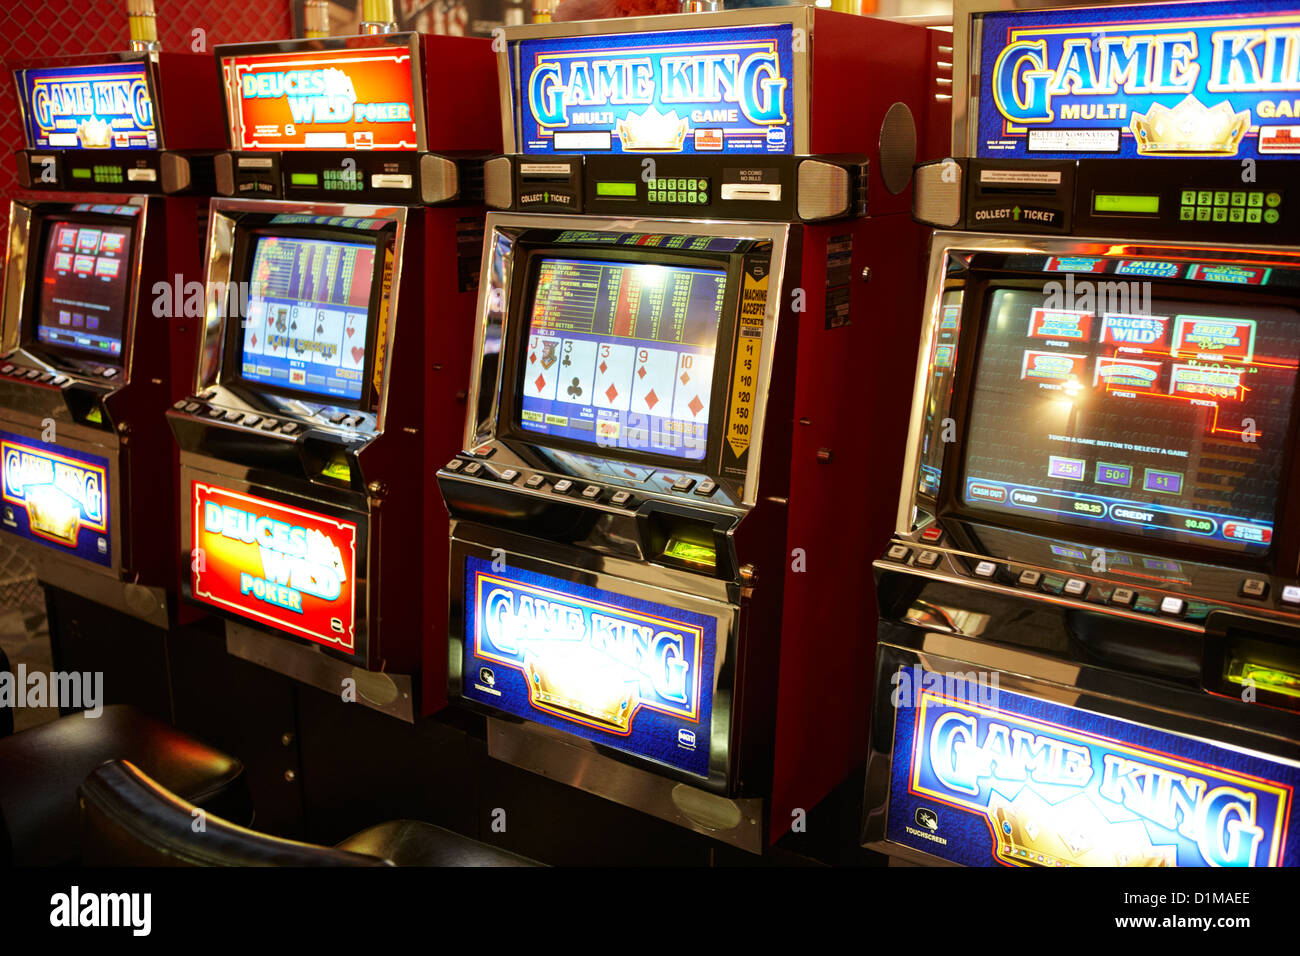 Video poker fobt fixed odds i terminali scommessa gaming macchine per gioco d'azzardo Las Vegas Nevada USA Foto Stock